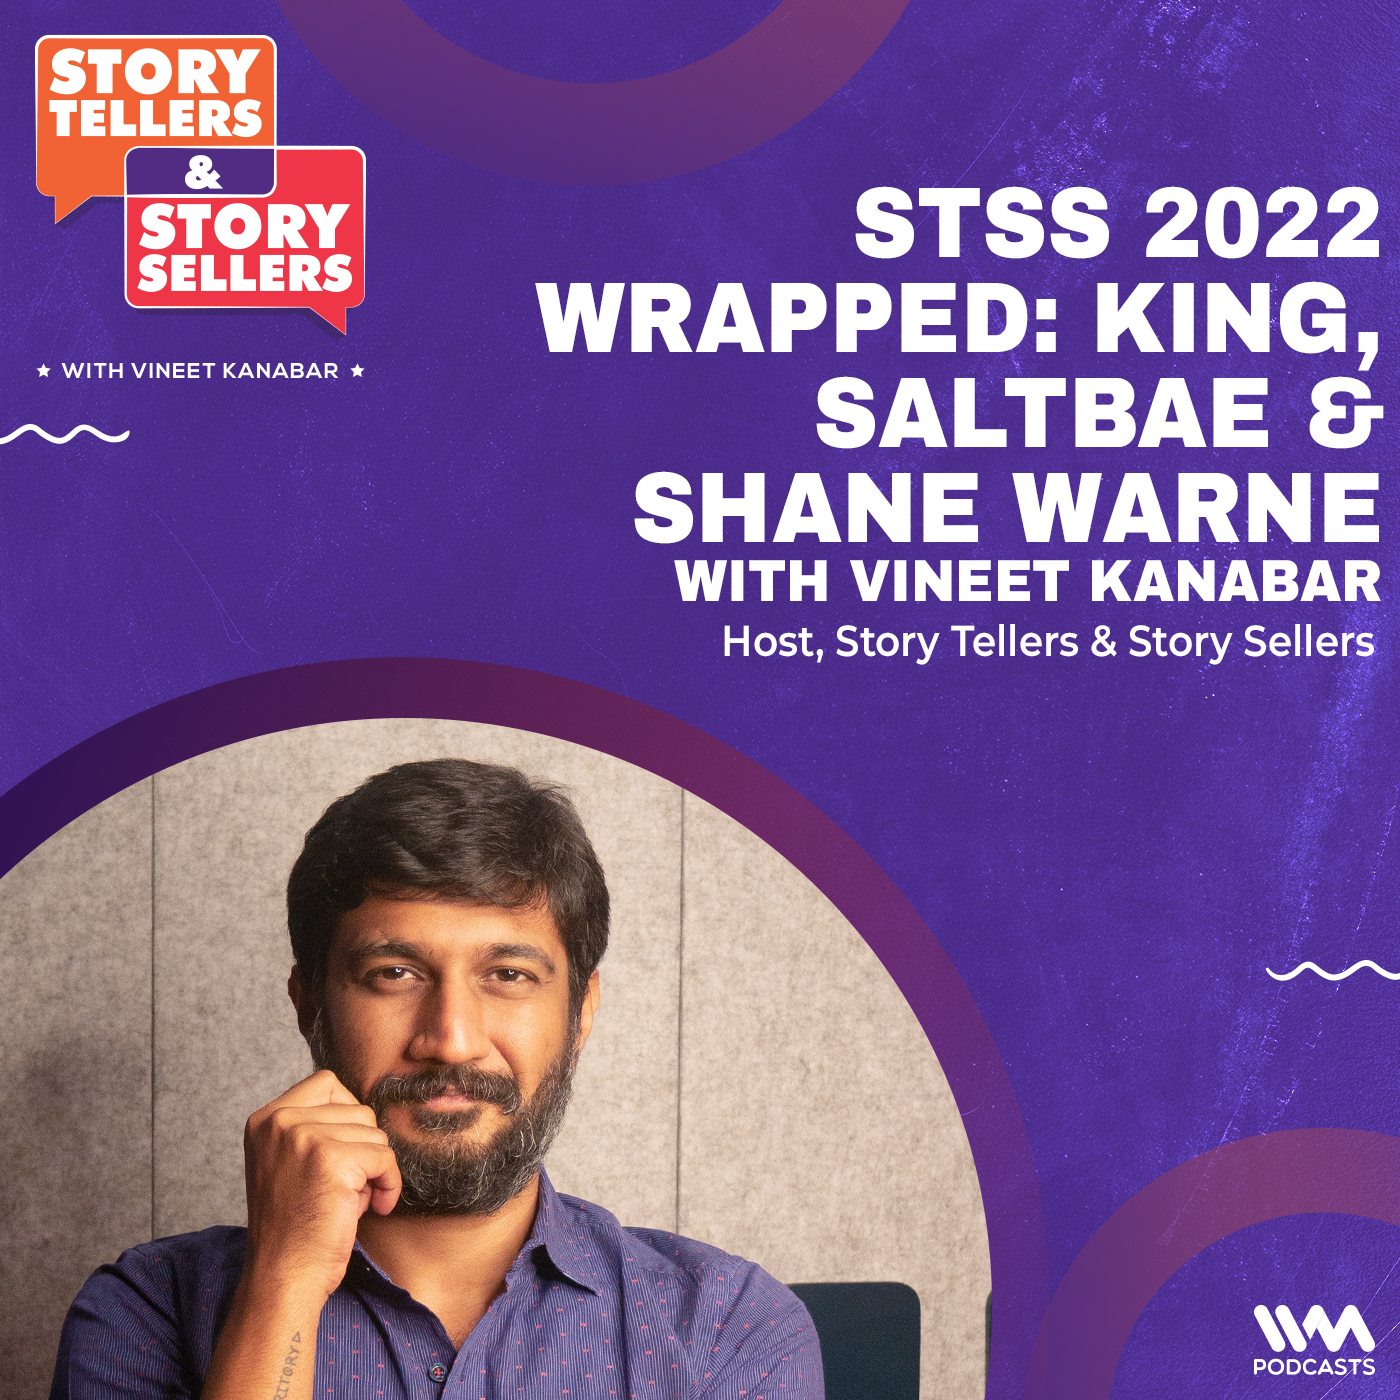 STSS 2022 Wrapped: King, Saltbae & Shane Warne